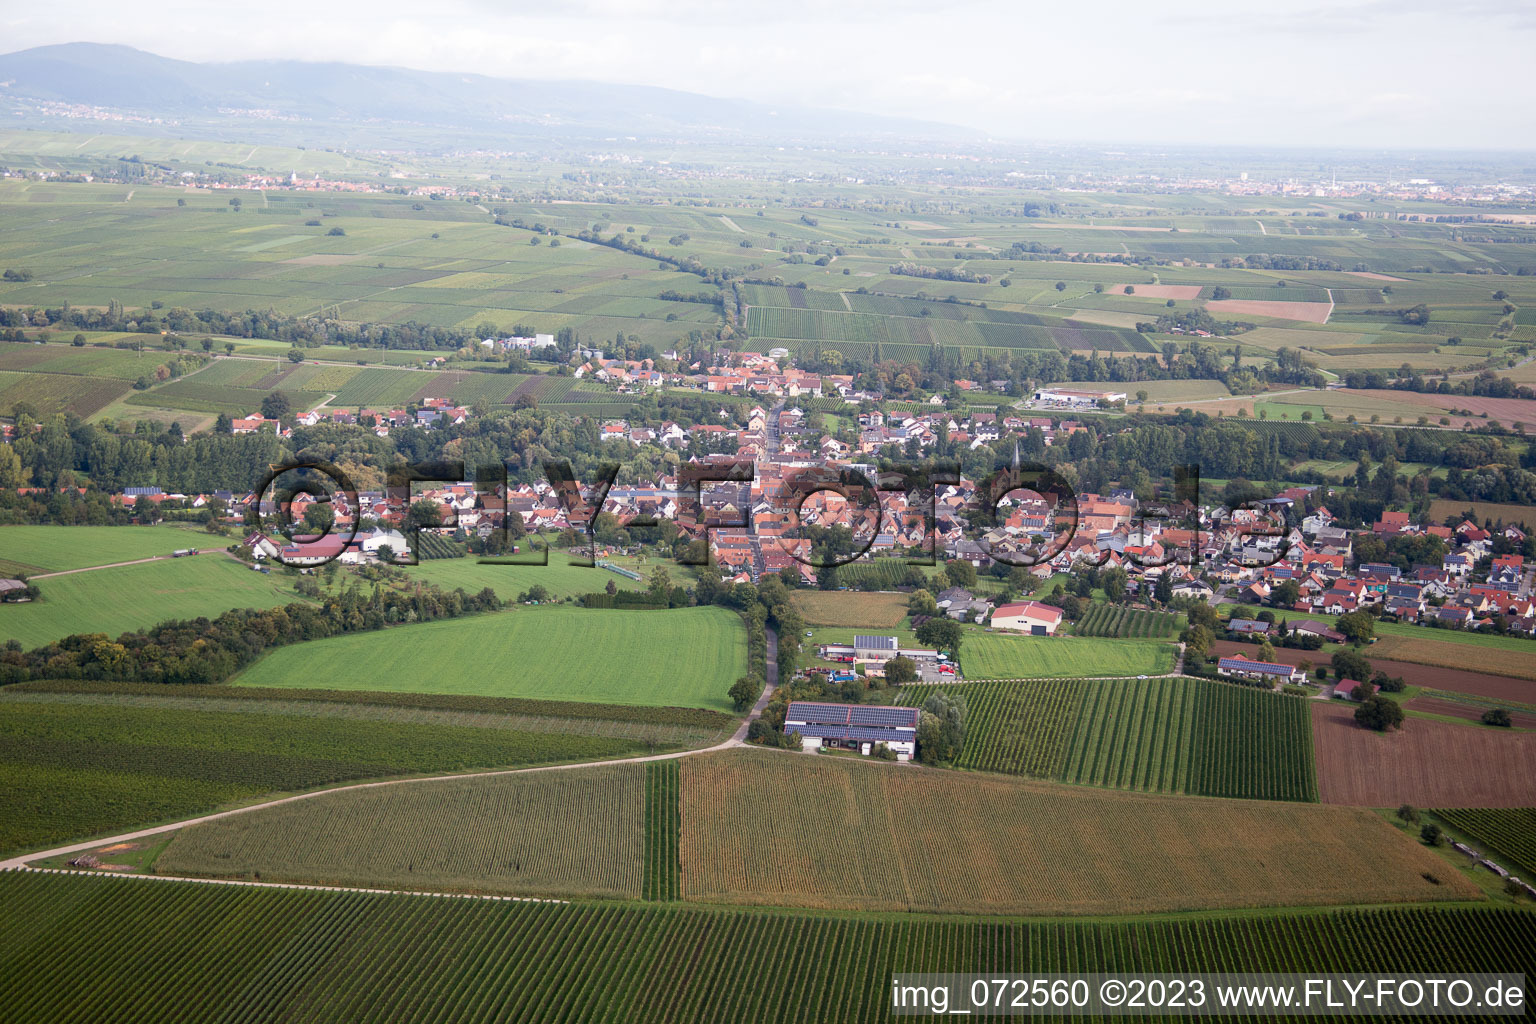 District Ingenheim in Billigheim-Ingenheim in the state Rhineland-Palatinate, Germany